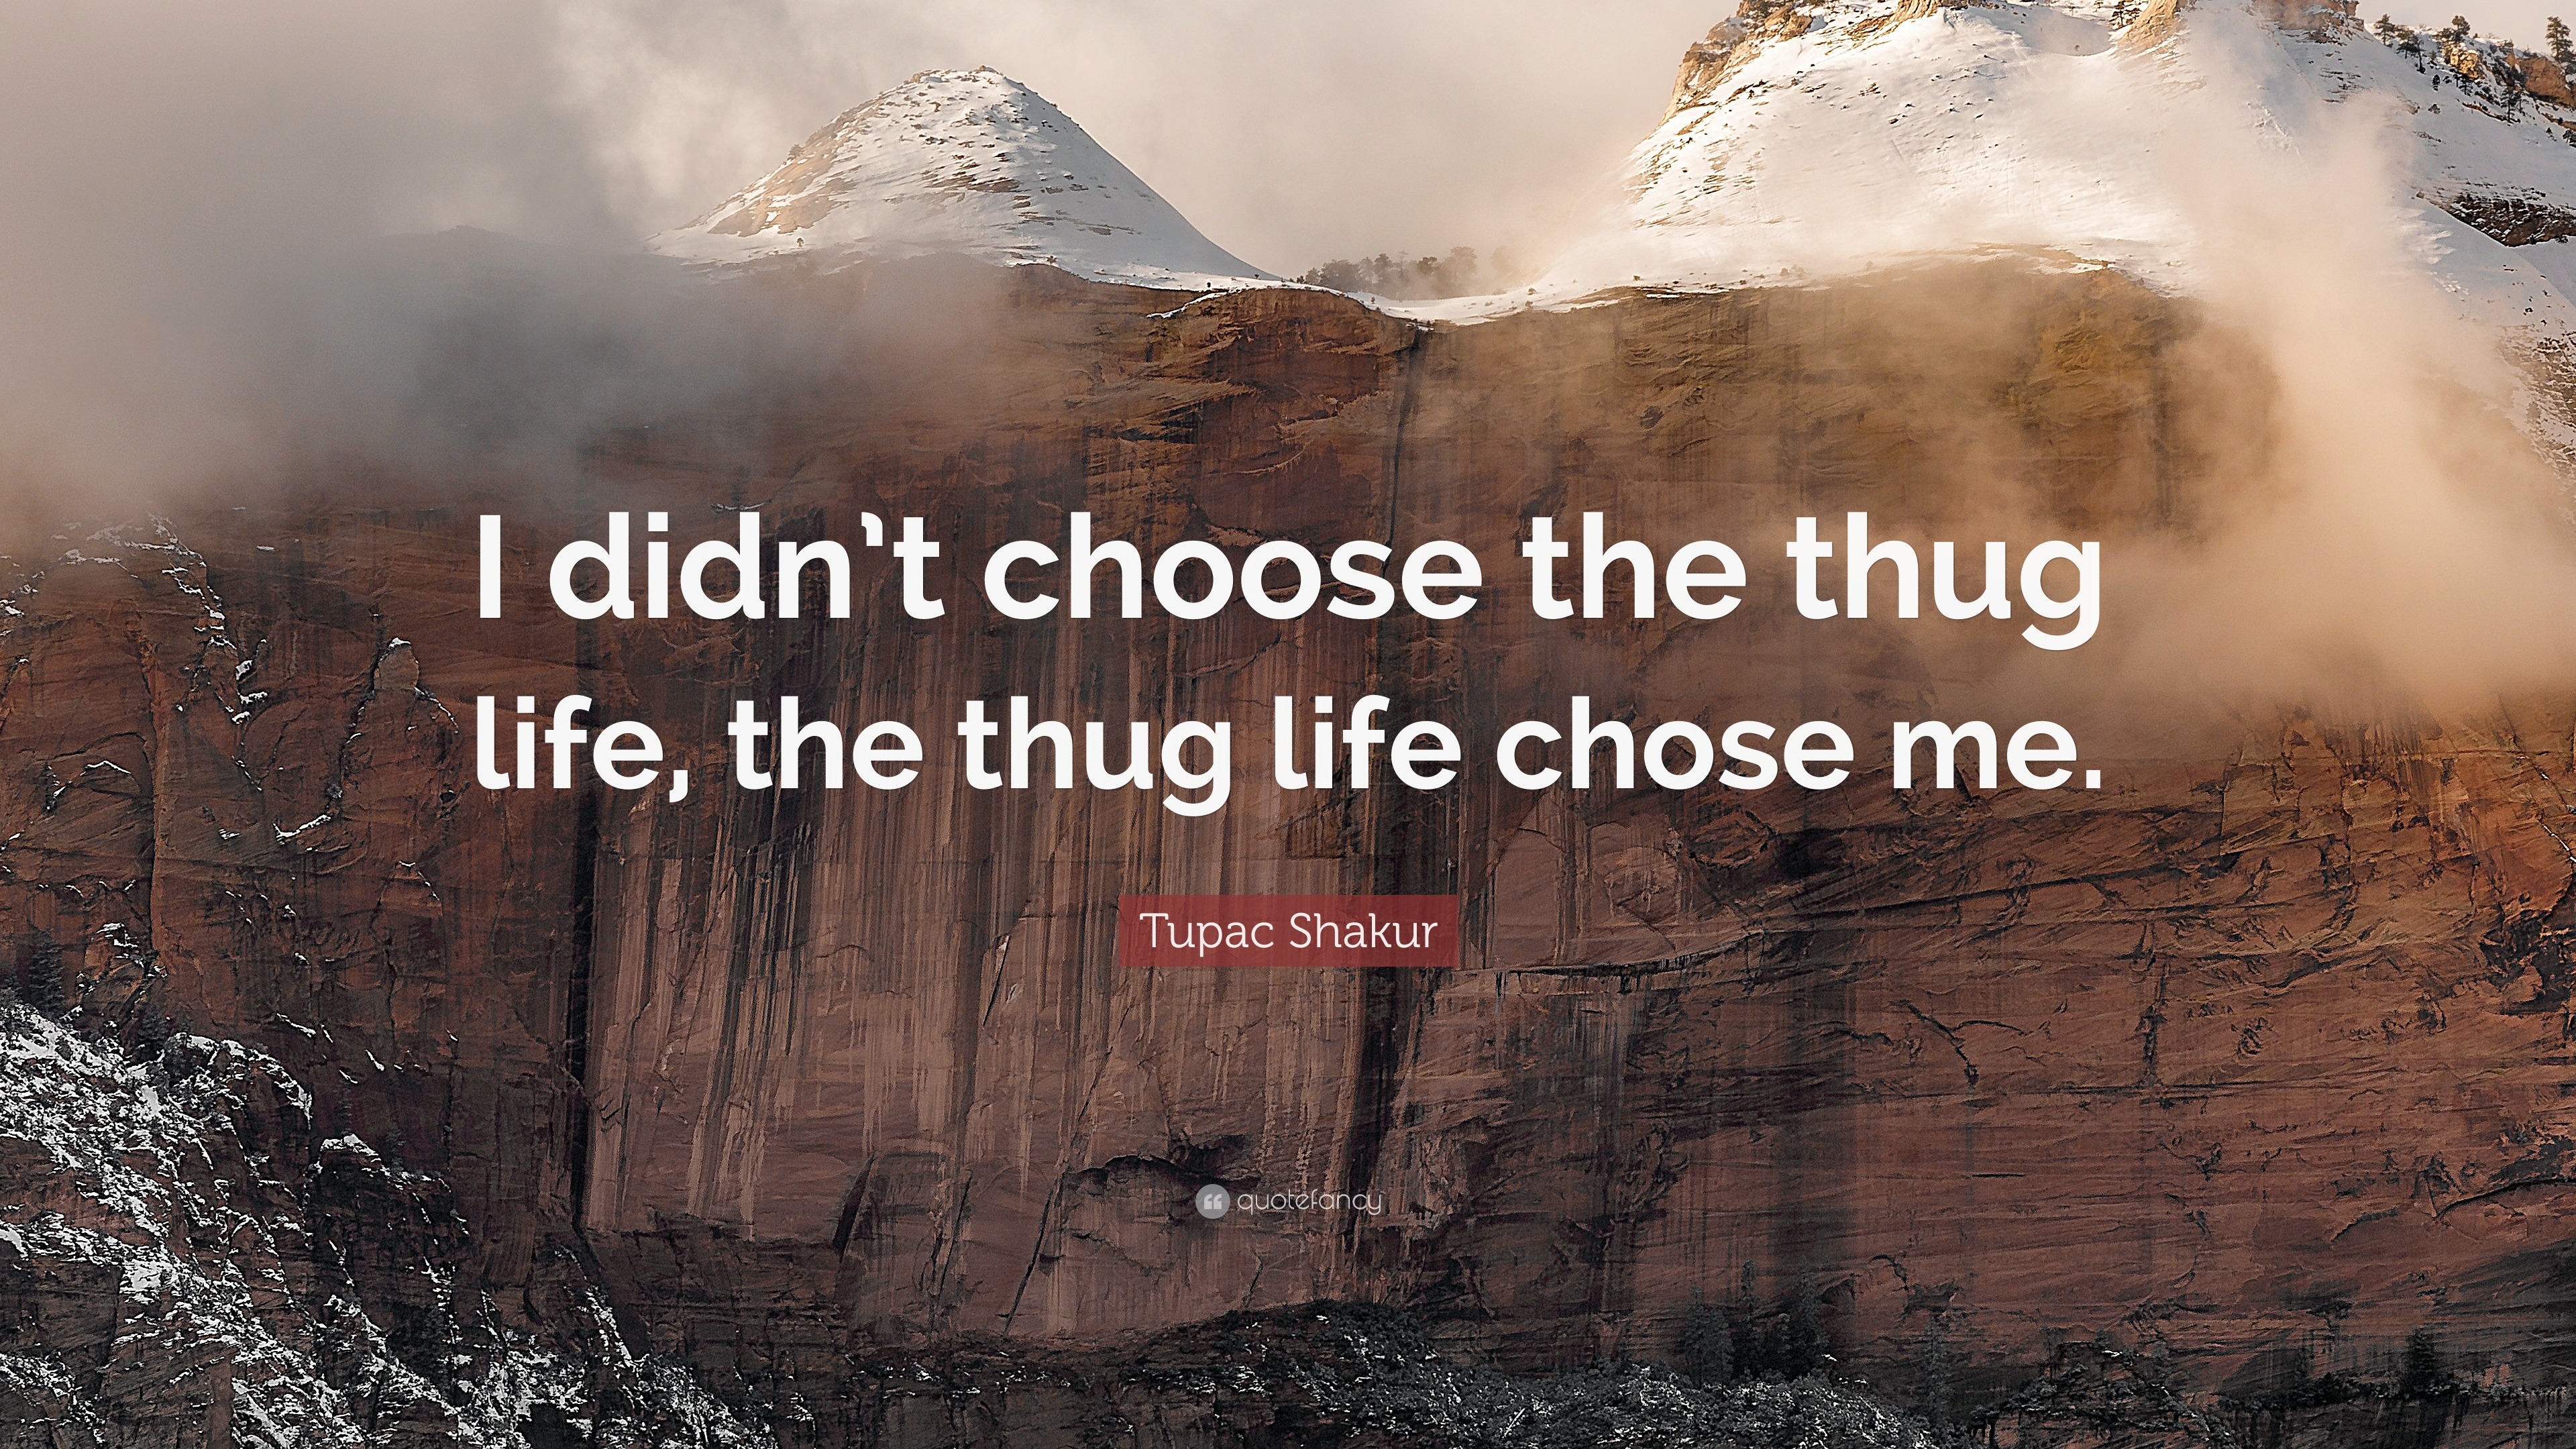 Tupac Shakur Quote: “I didn't choose the thug life, the thug life chose me.”